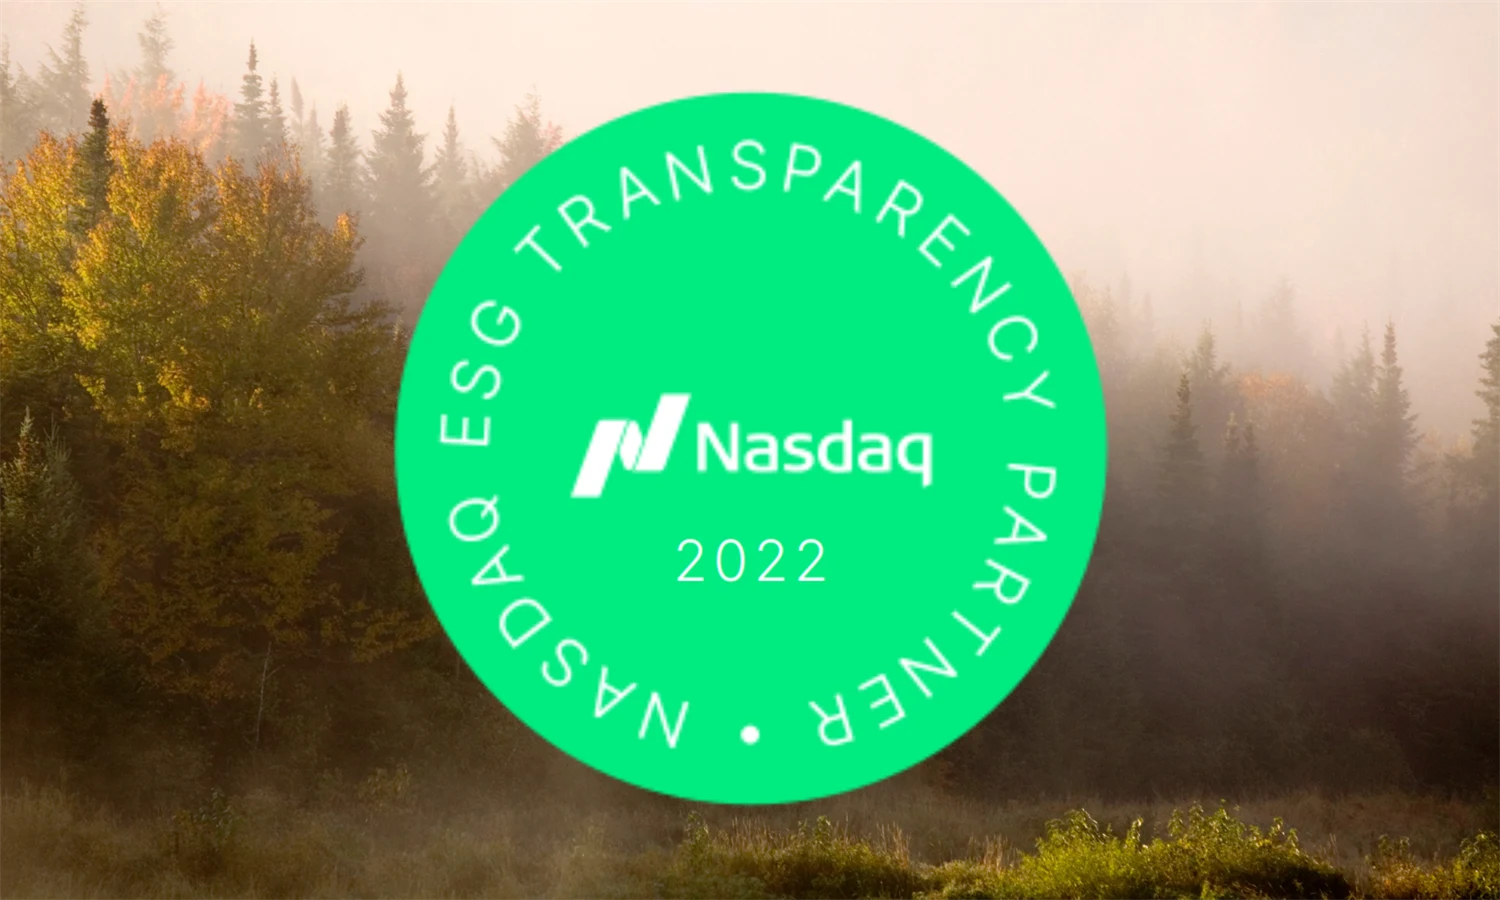 Nasdaq ESG Transparacy Partner 2022